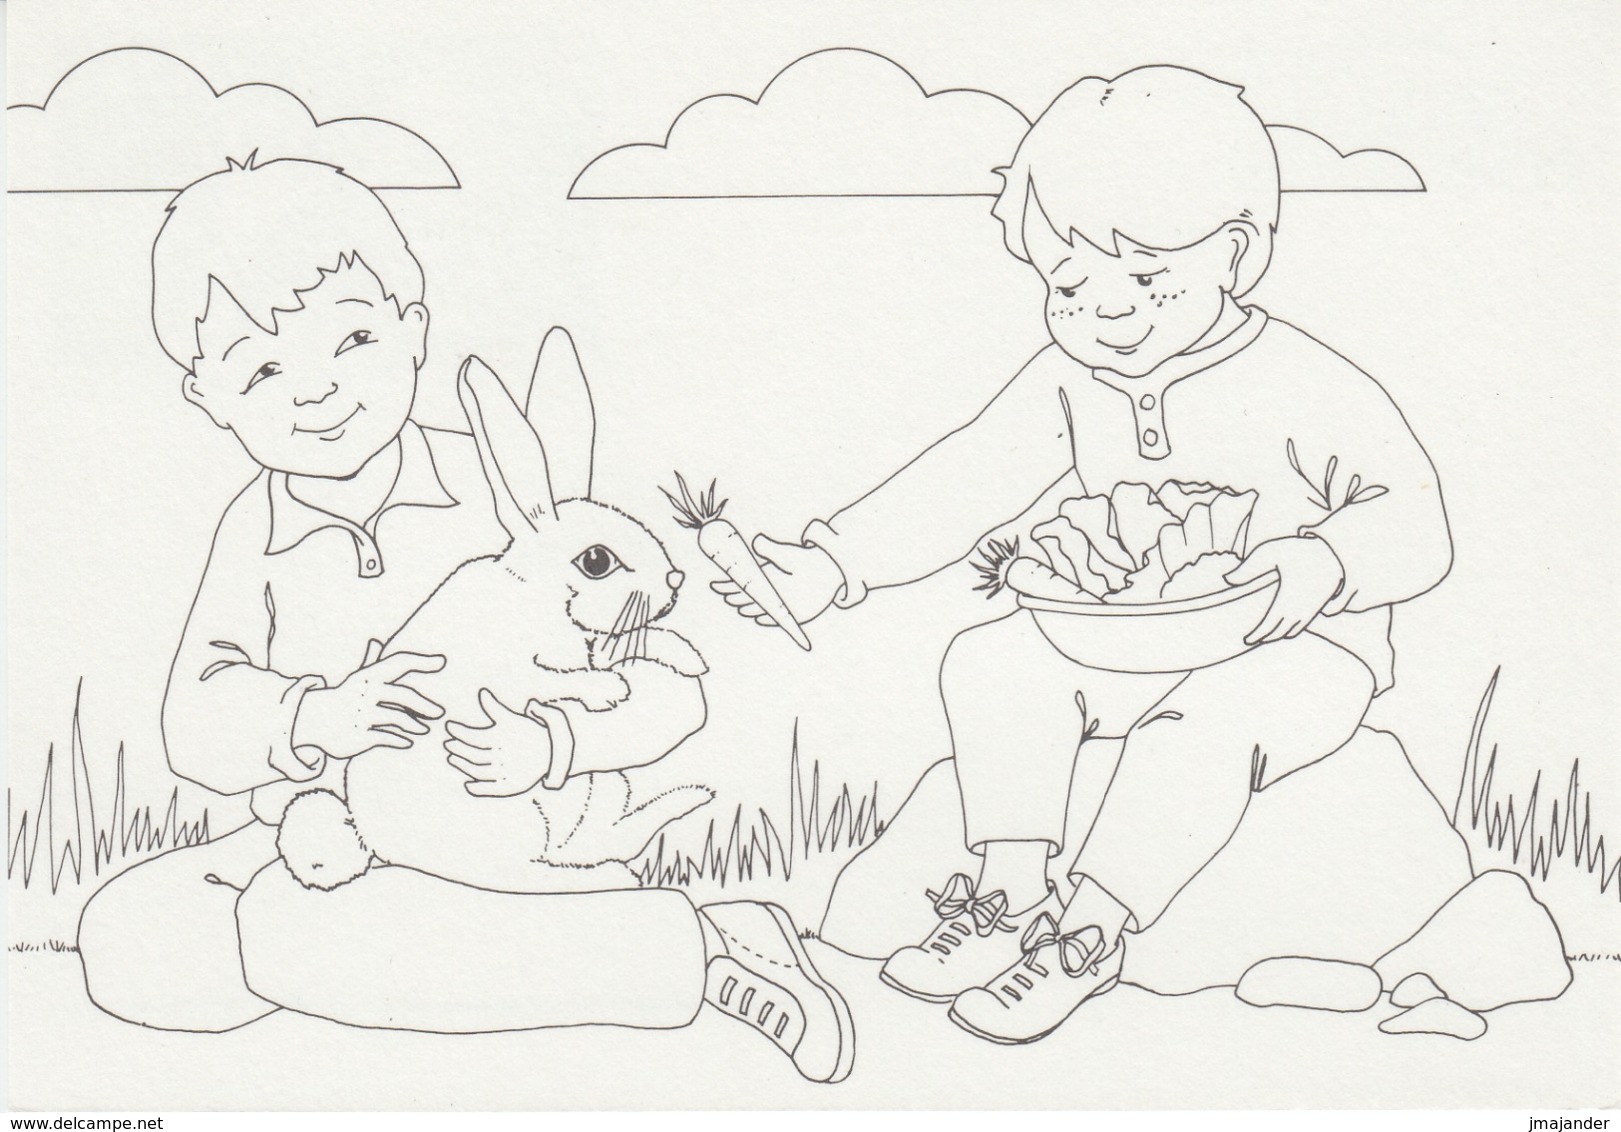 Ireland - Kiddy Colour Card: Rabbit, Carrot - Postal Stationery Card MNH ** - Enteros Postales